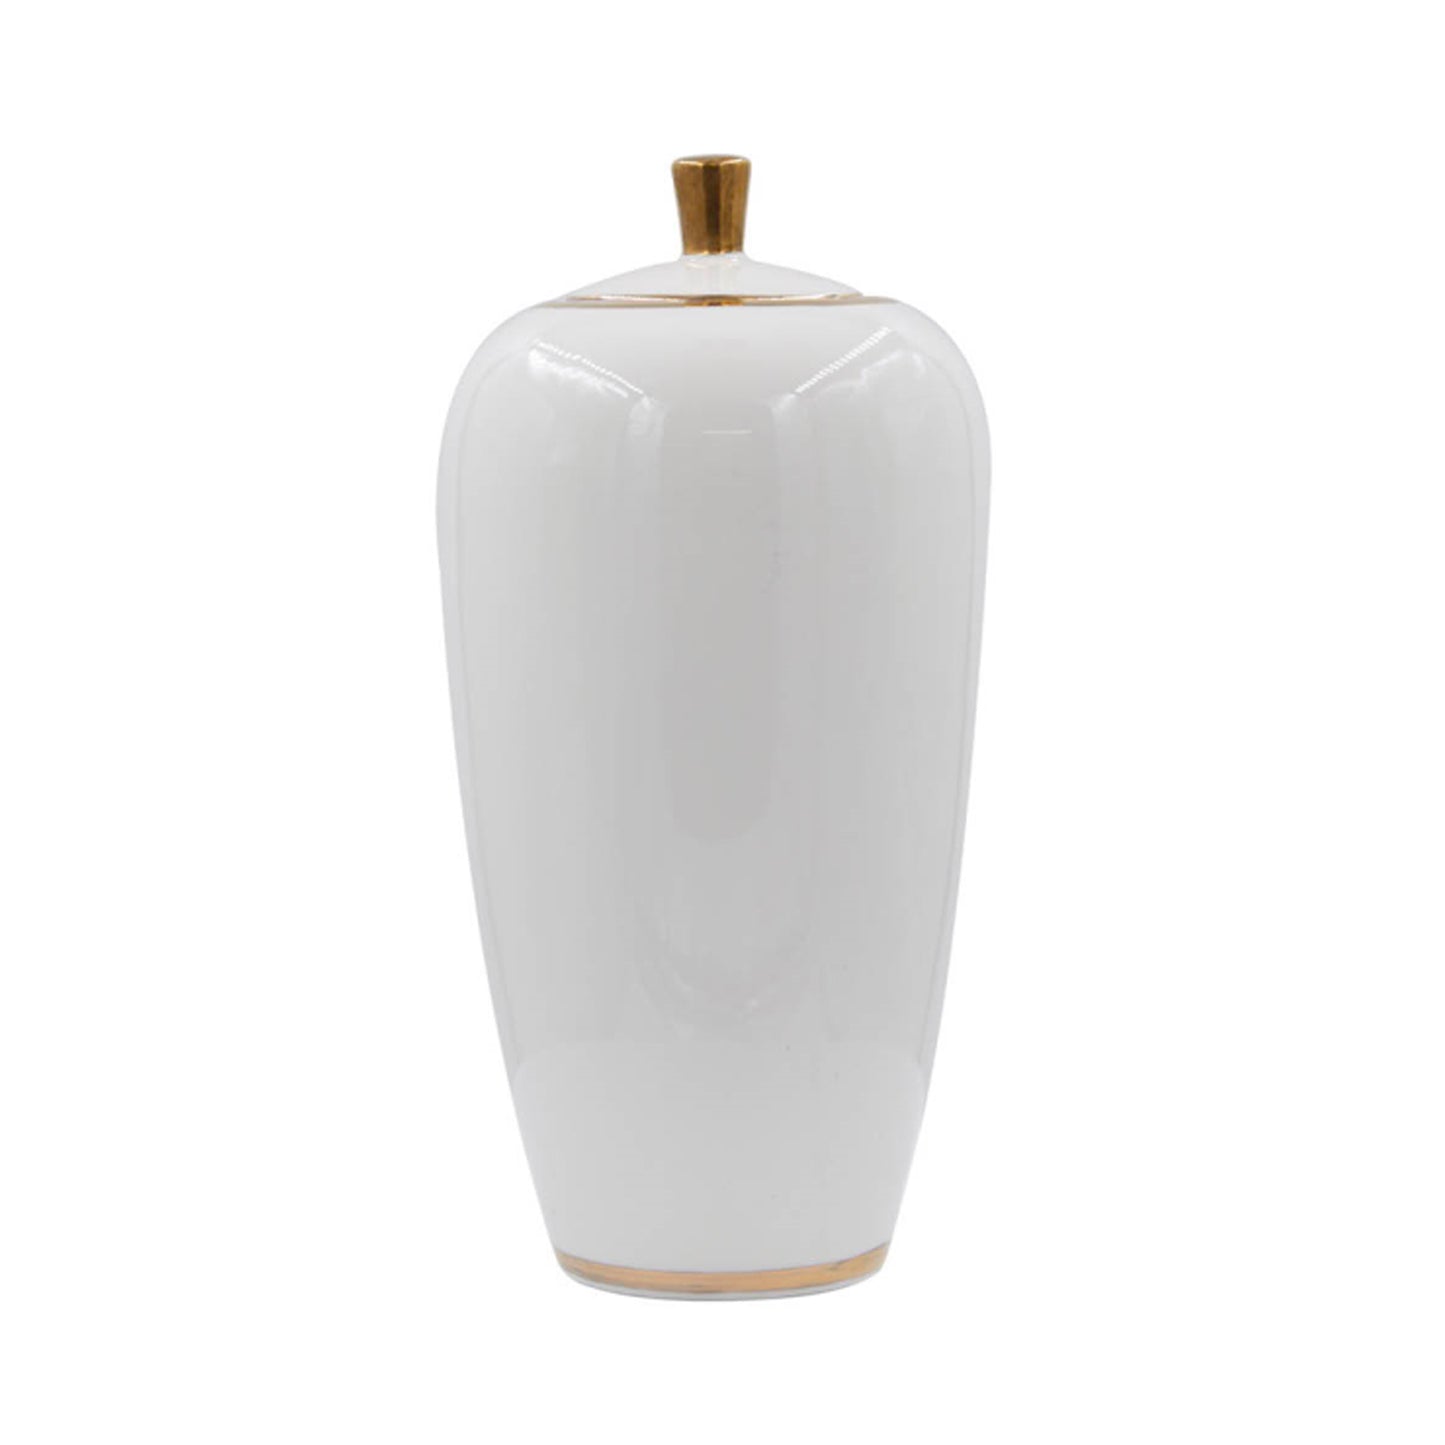 White Ceramic Ginger Jar With Gold Trim Large